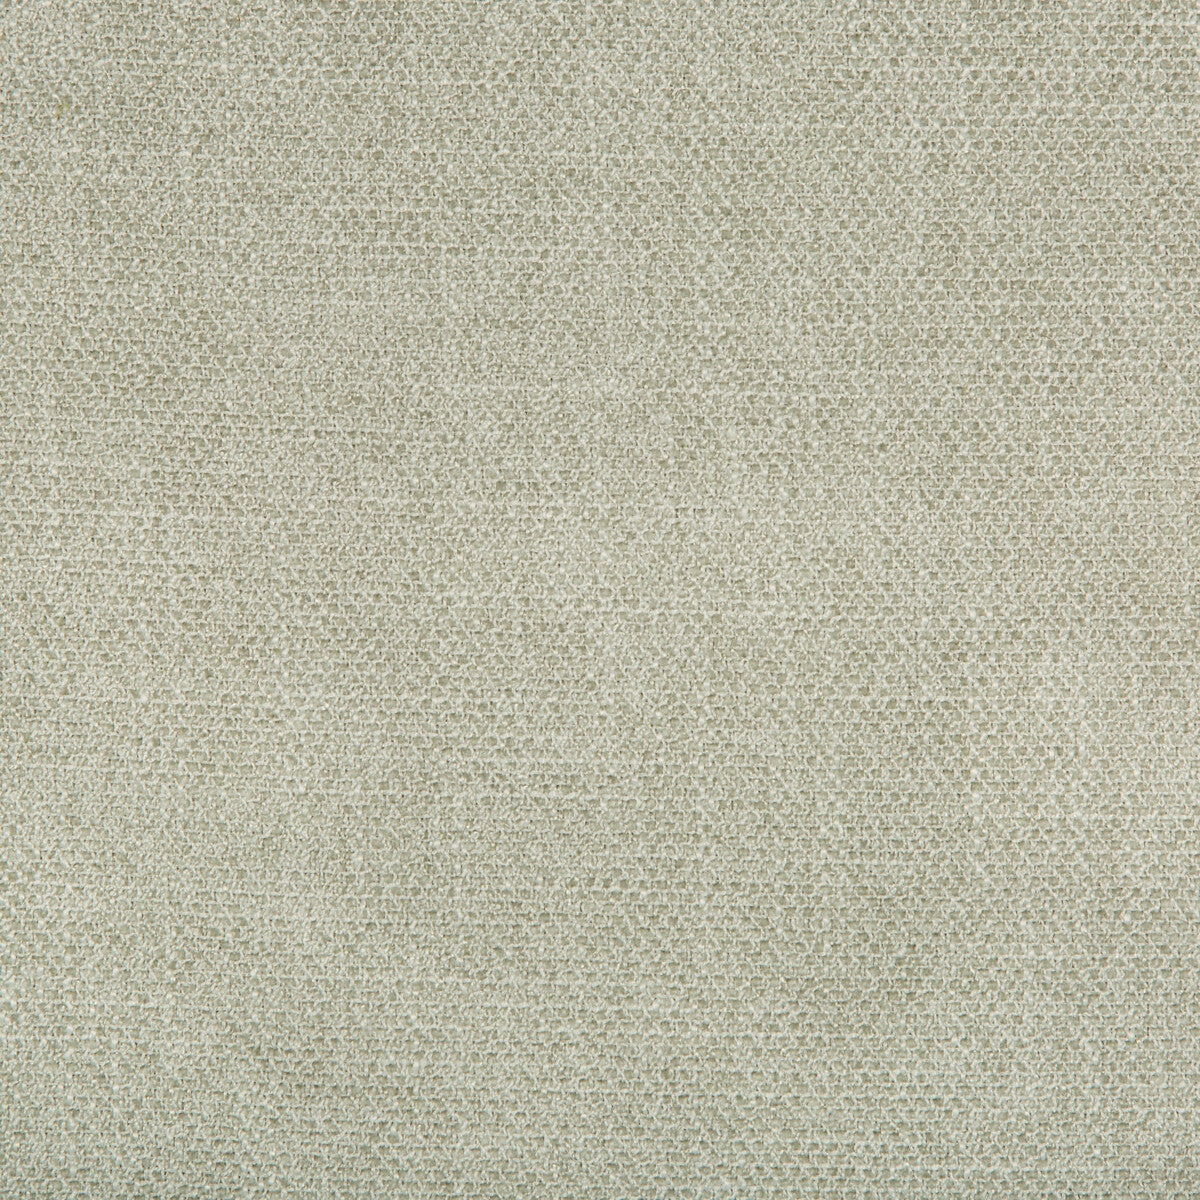 Kf Smt fabric - pattern 35060.130.0 - by Kravet Smart in the Performance Kravetarmor collection